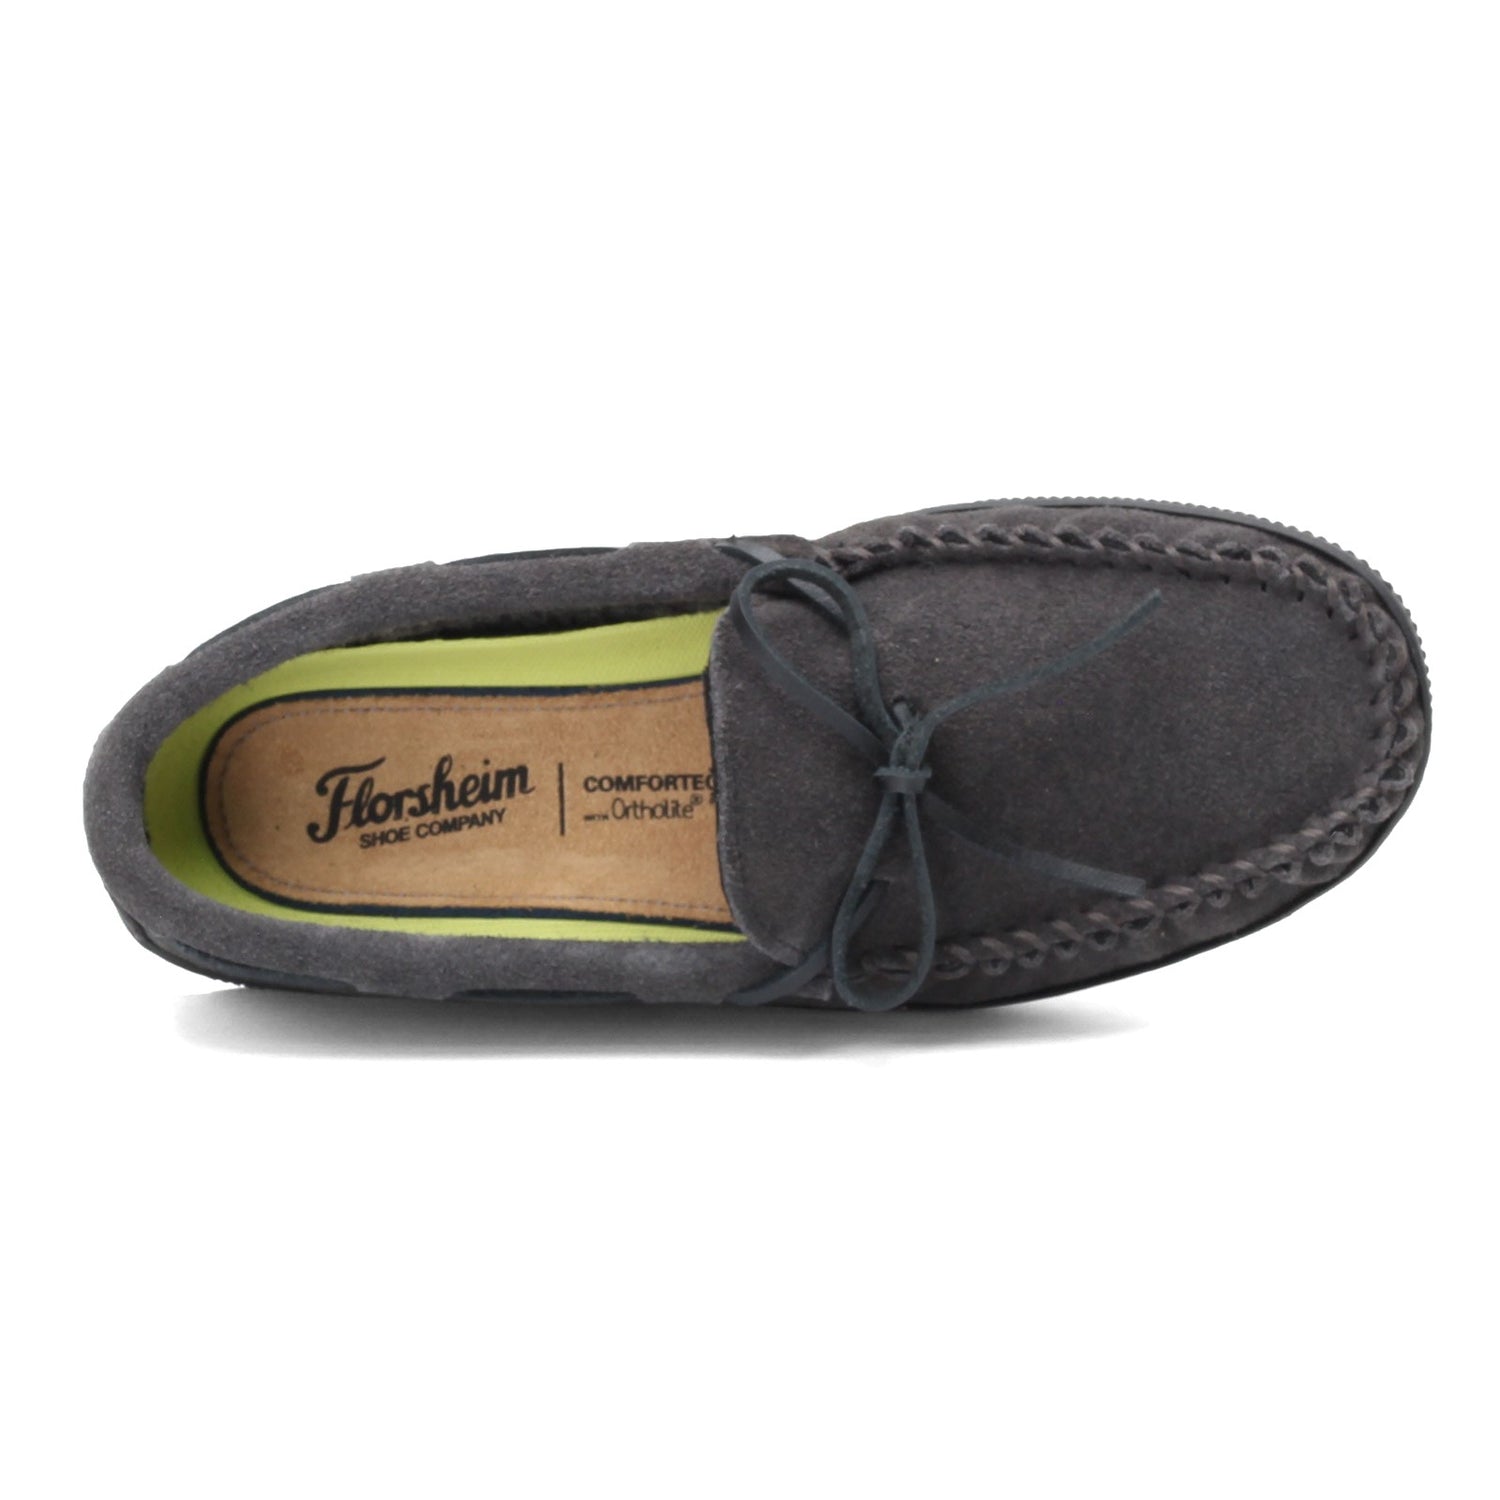 Peltz Shoes  Men's Florsheim Cozzy Moc Toe Slipper GRAY 12184-061